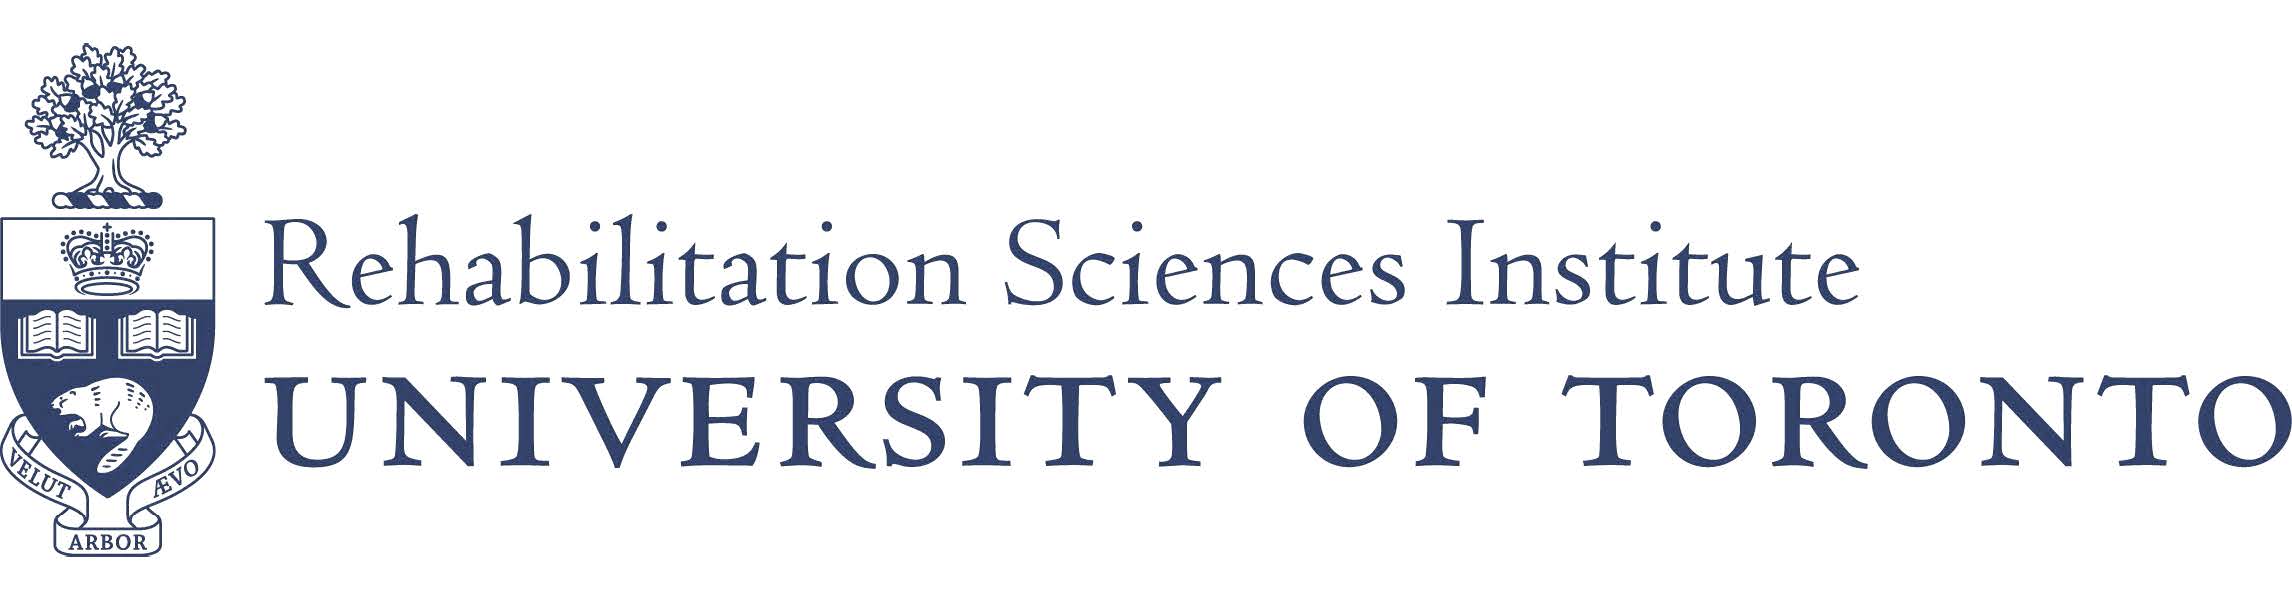 Rehabilitation Sciences University of Toronto Logo